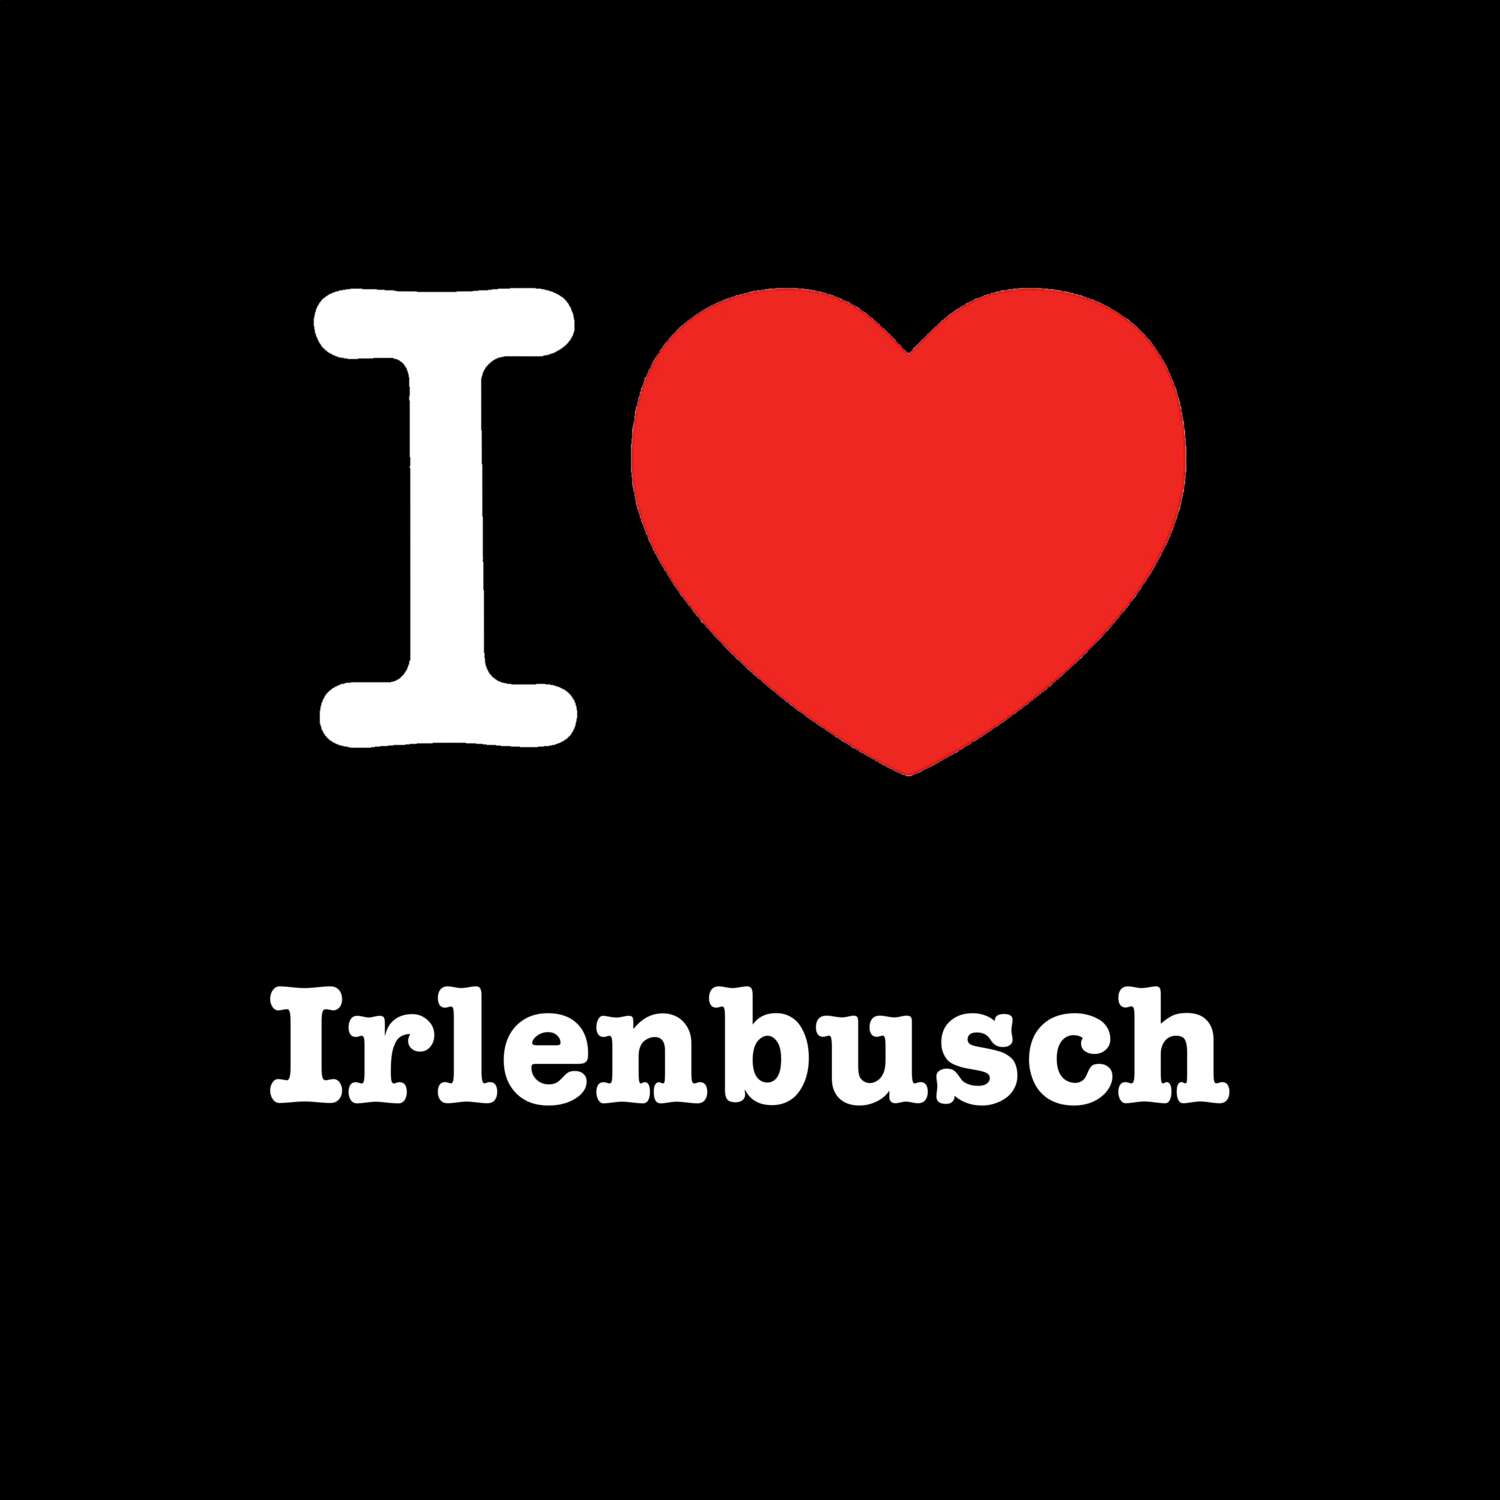 Irlenbusch T-Shirt »I love«